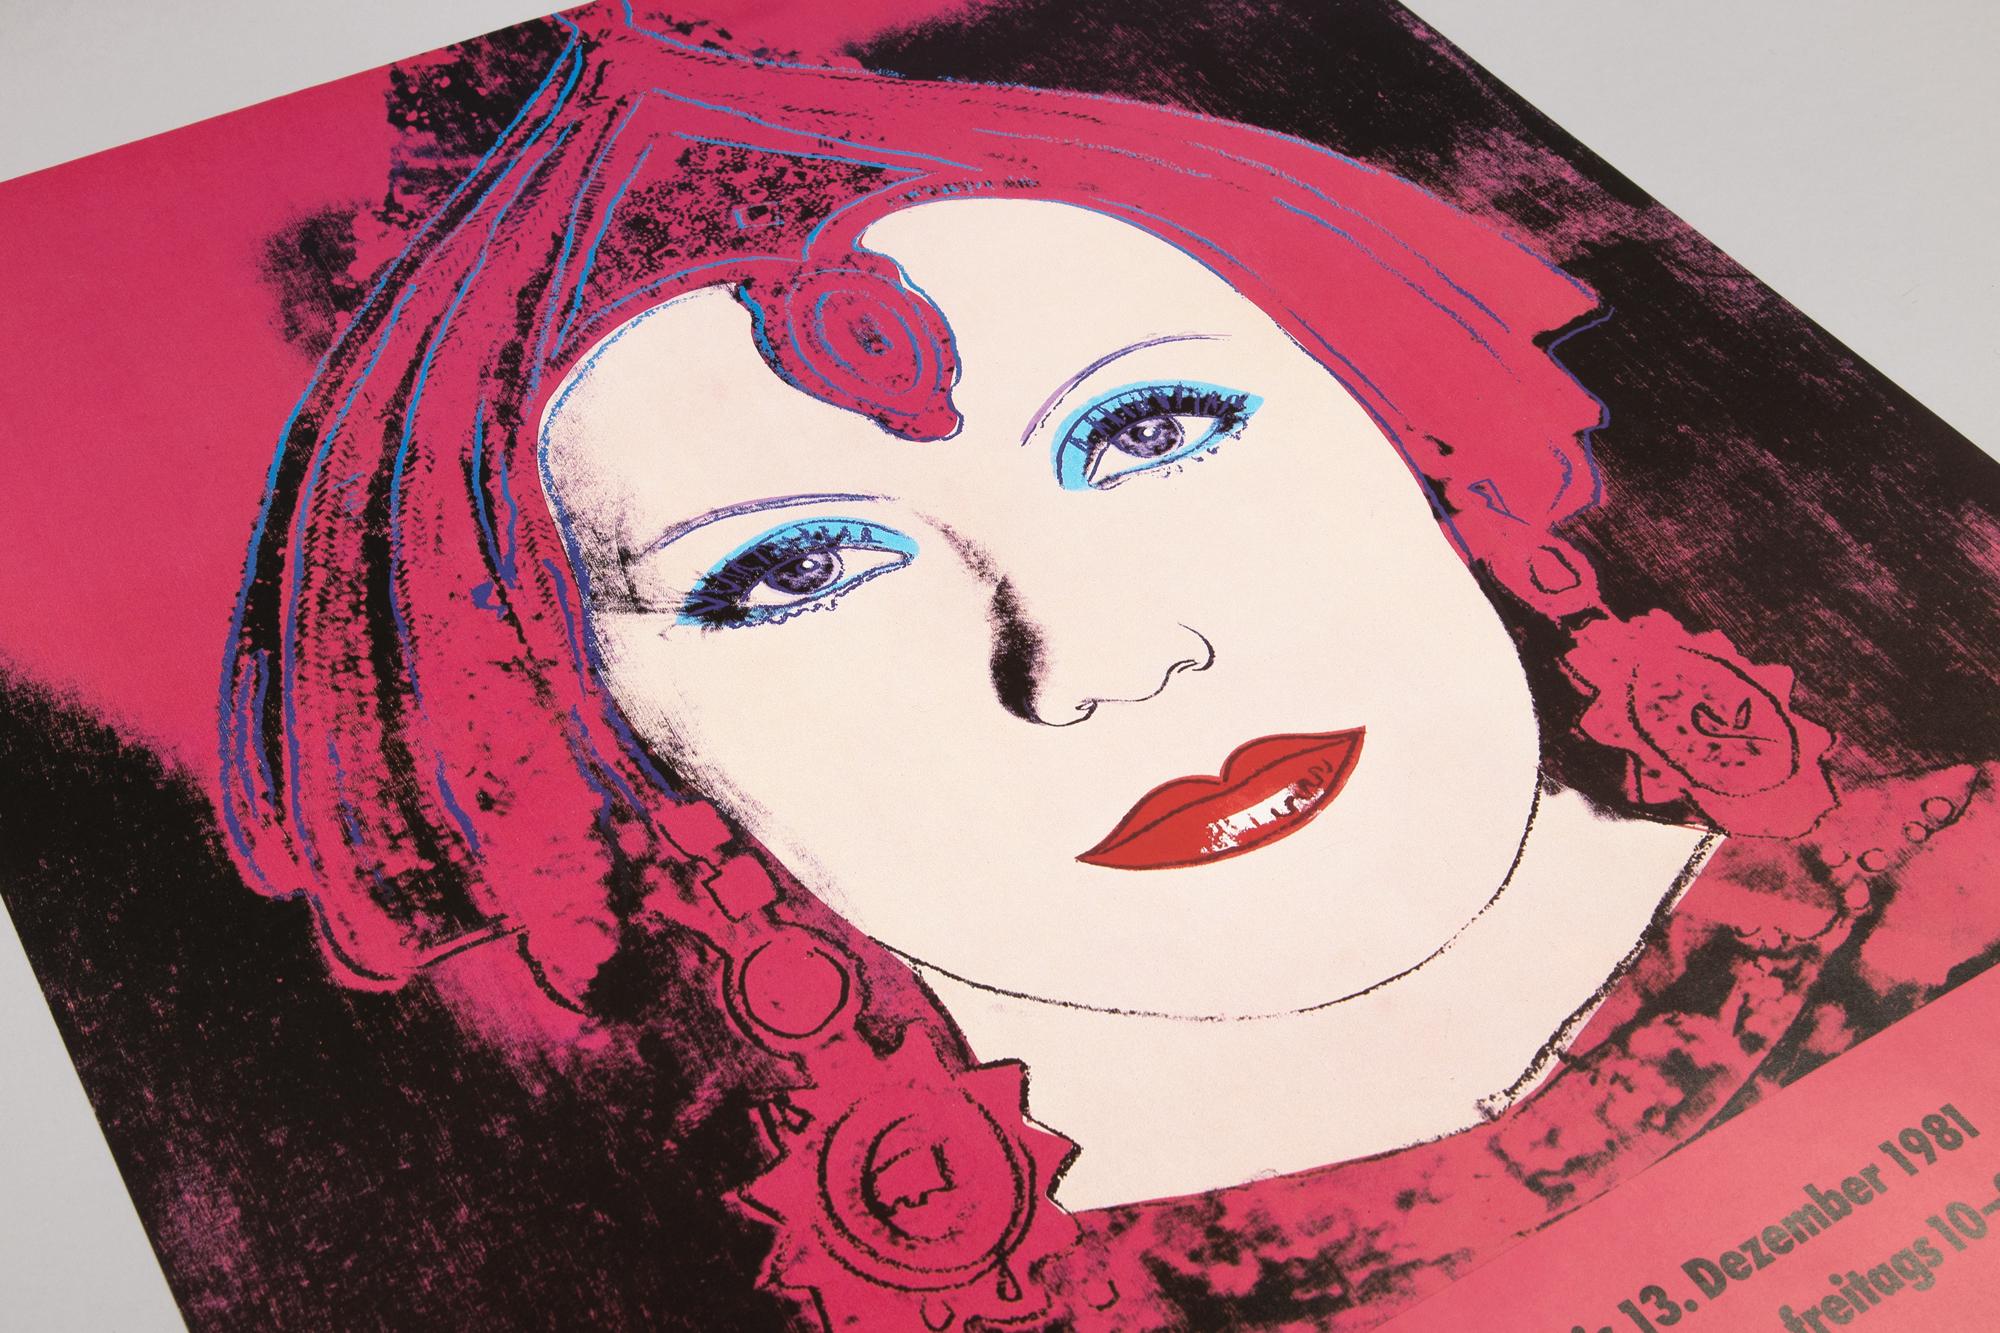 Andy Warhol, The Star - Kestner-Gesellschaft, Exhibition Poster, Pop Art Print - Pink Portrait Print by (after) Andy Warhol